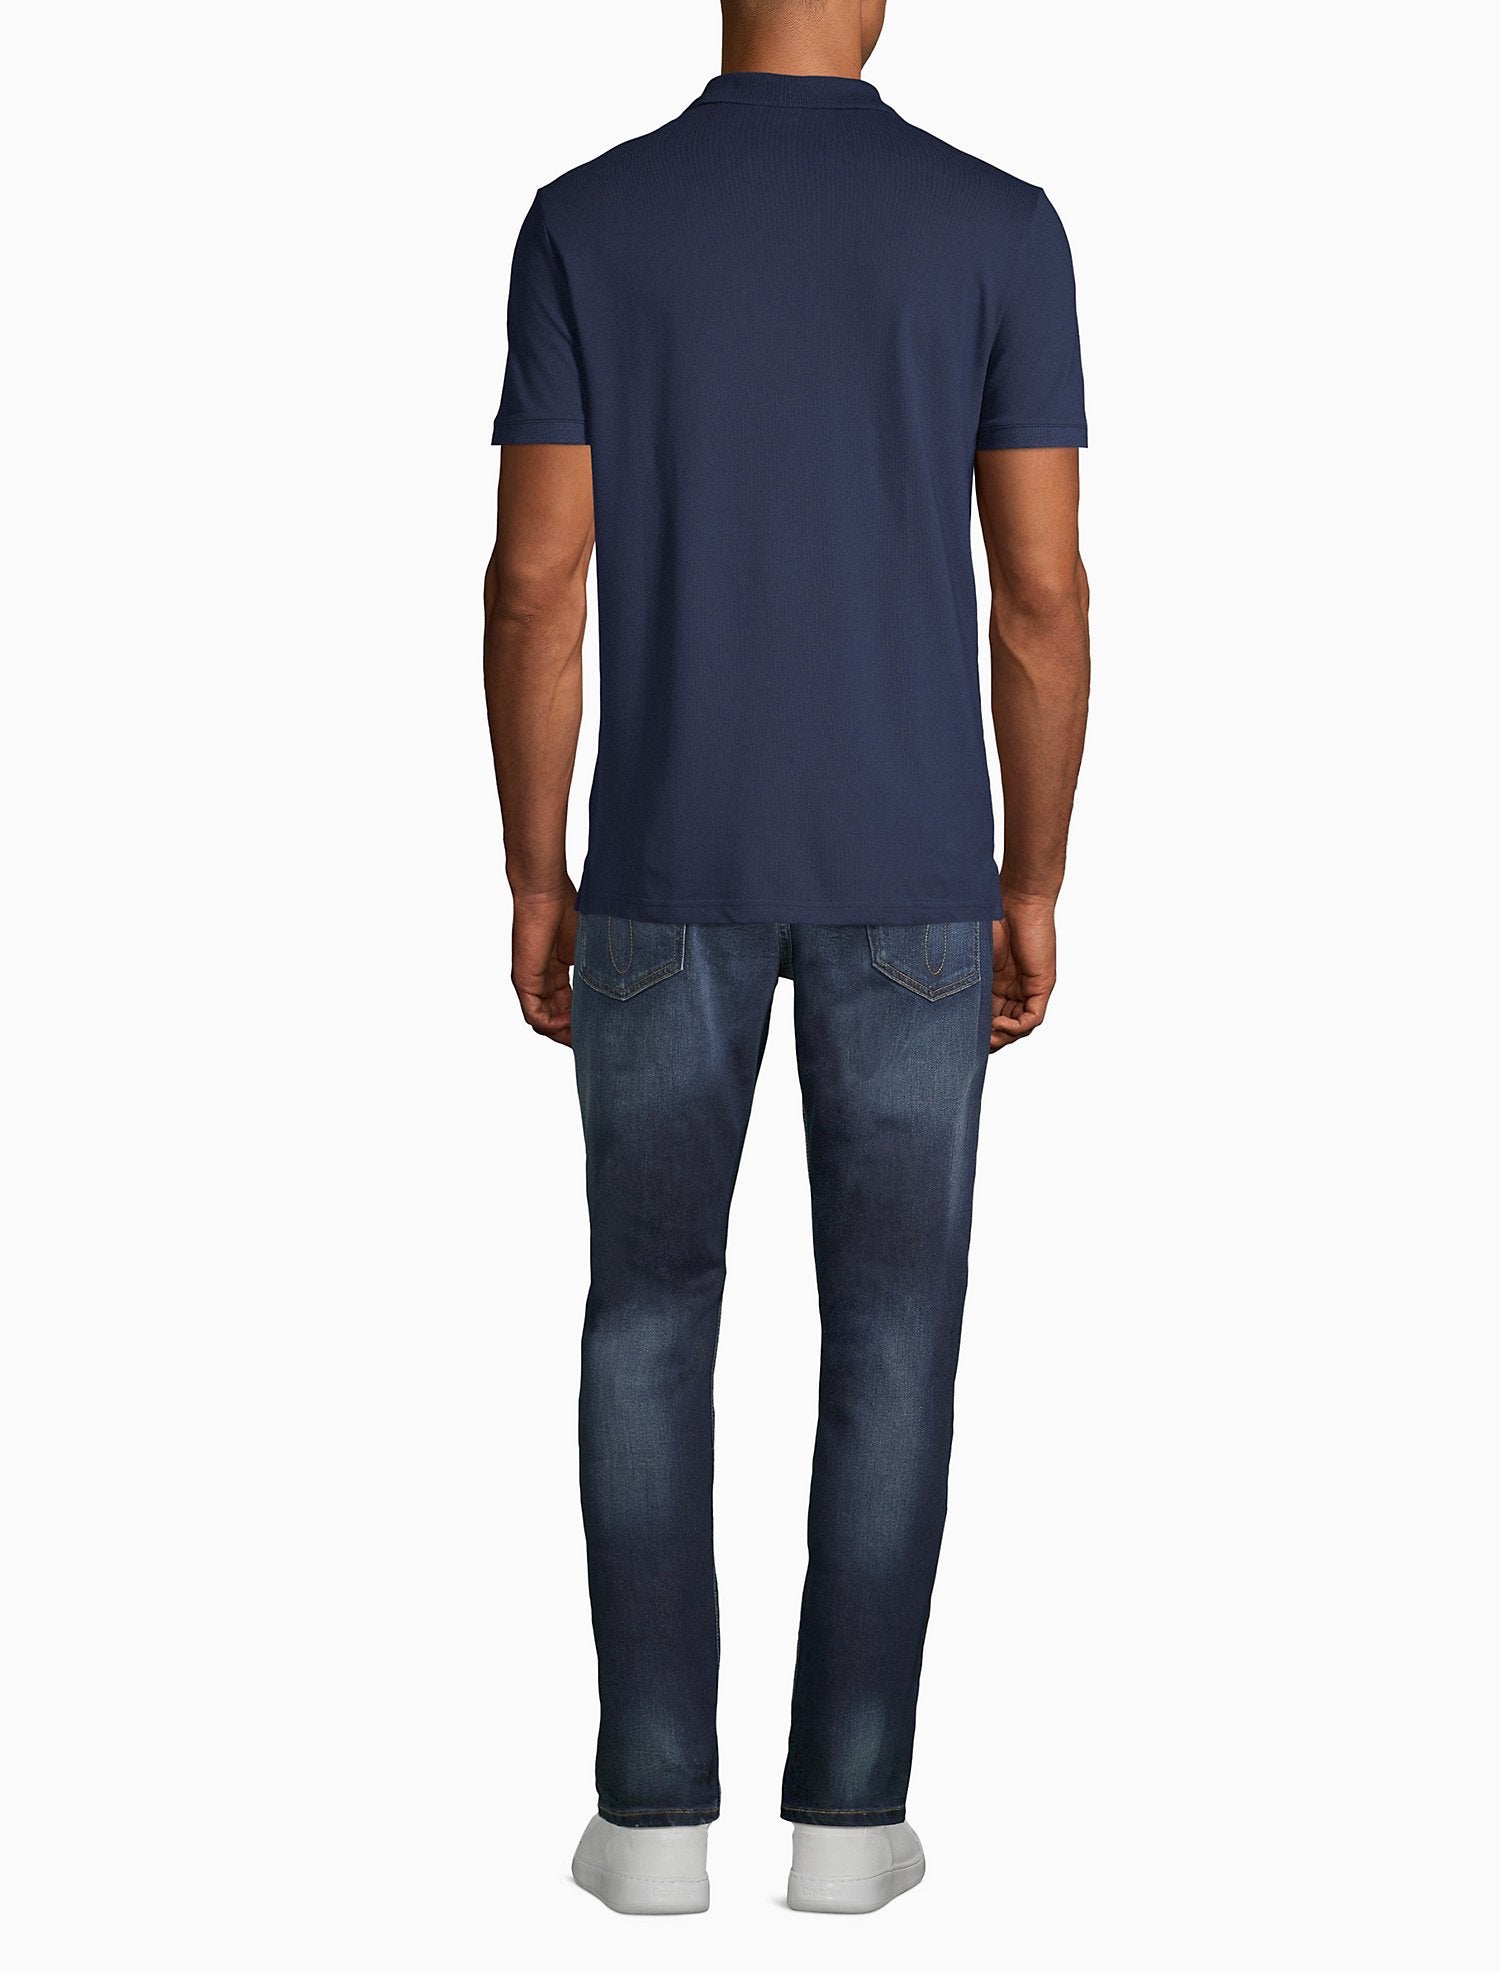 Calvin Klein Regular Fit Solid Pique Knit Polo Shirt - Men